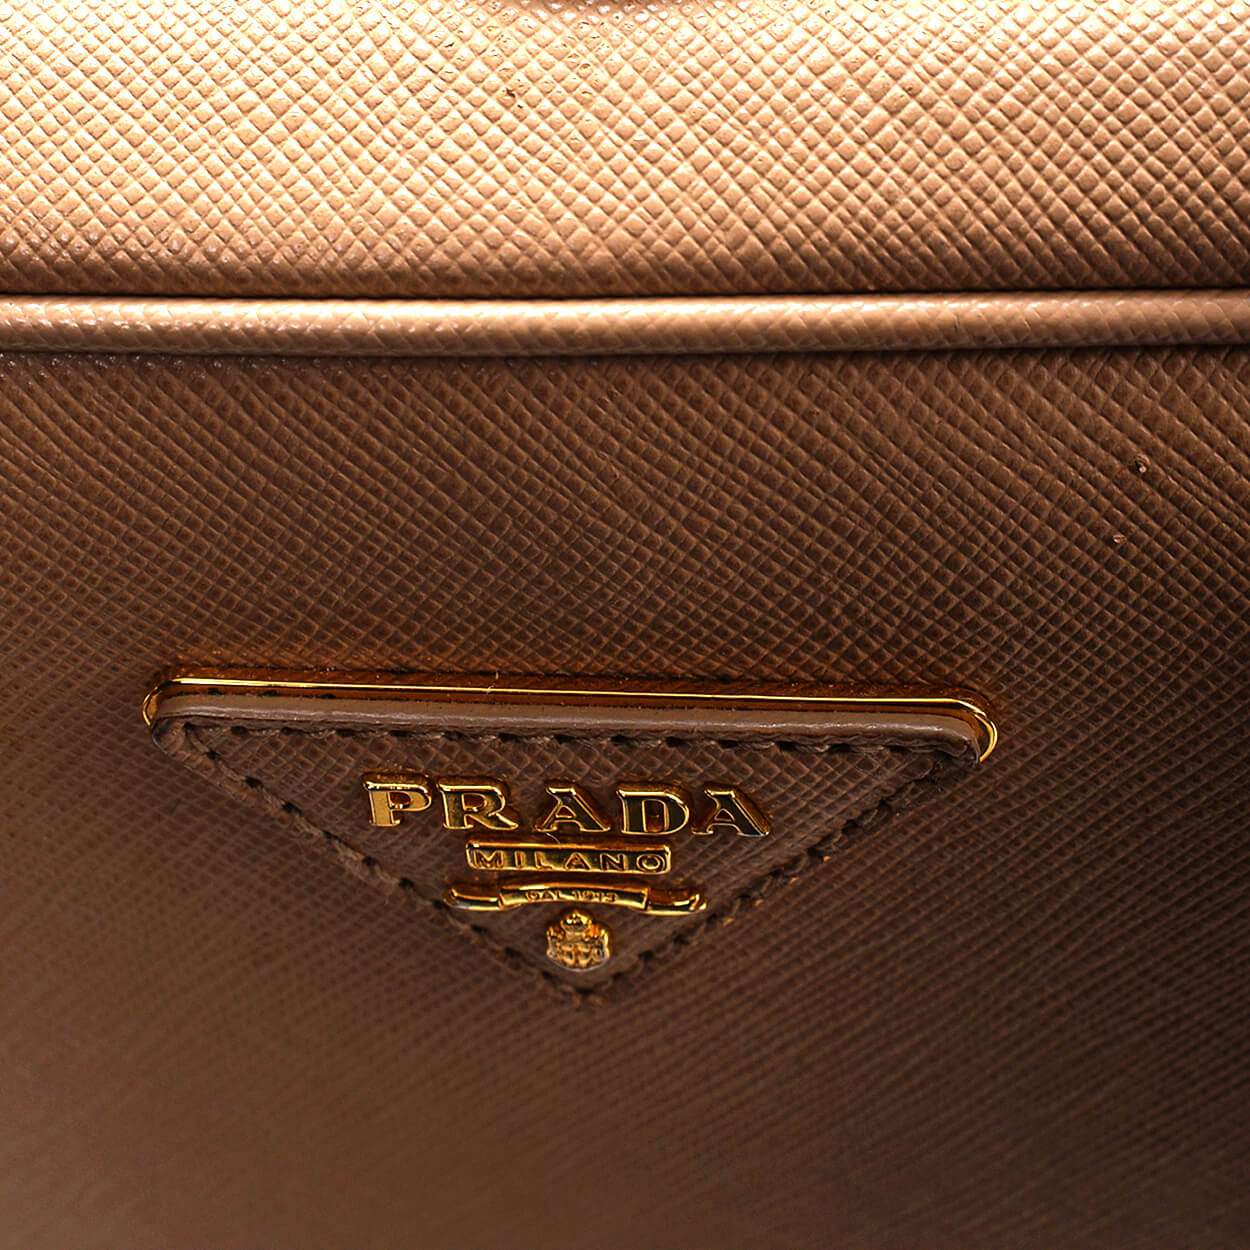 Prada - Beige Saffiano Leather Pyramid Frame Top Handle Bag 